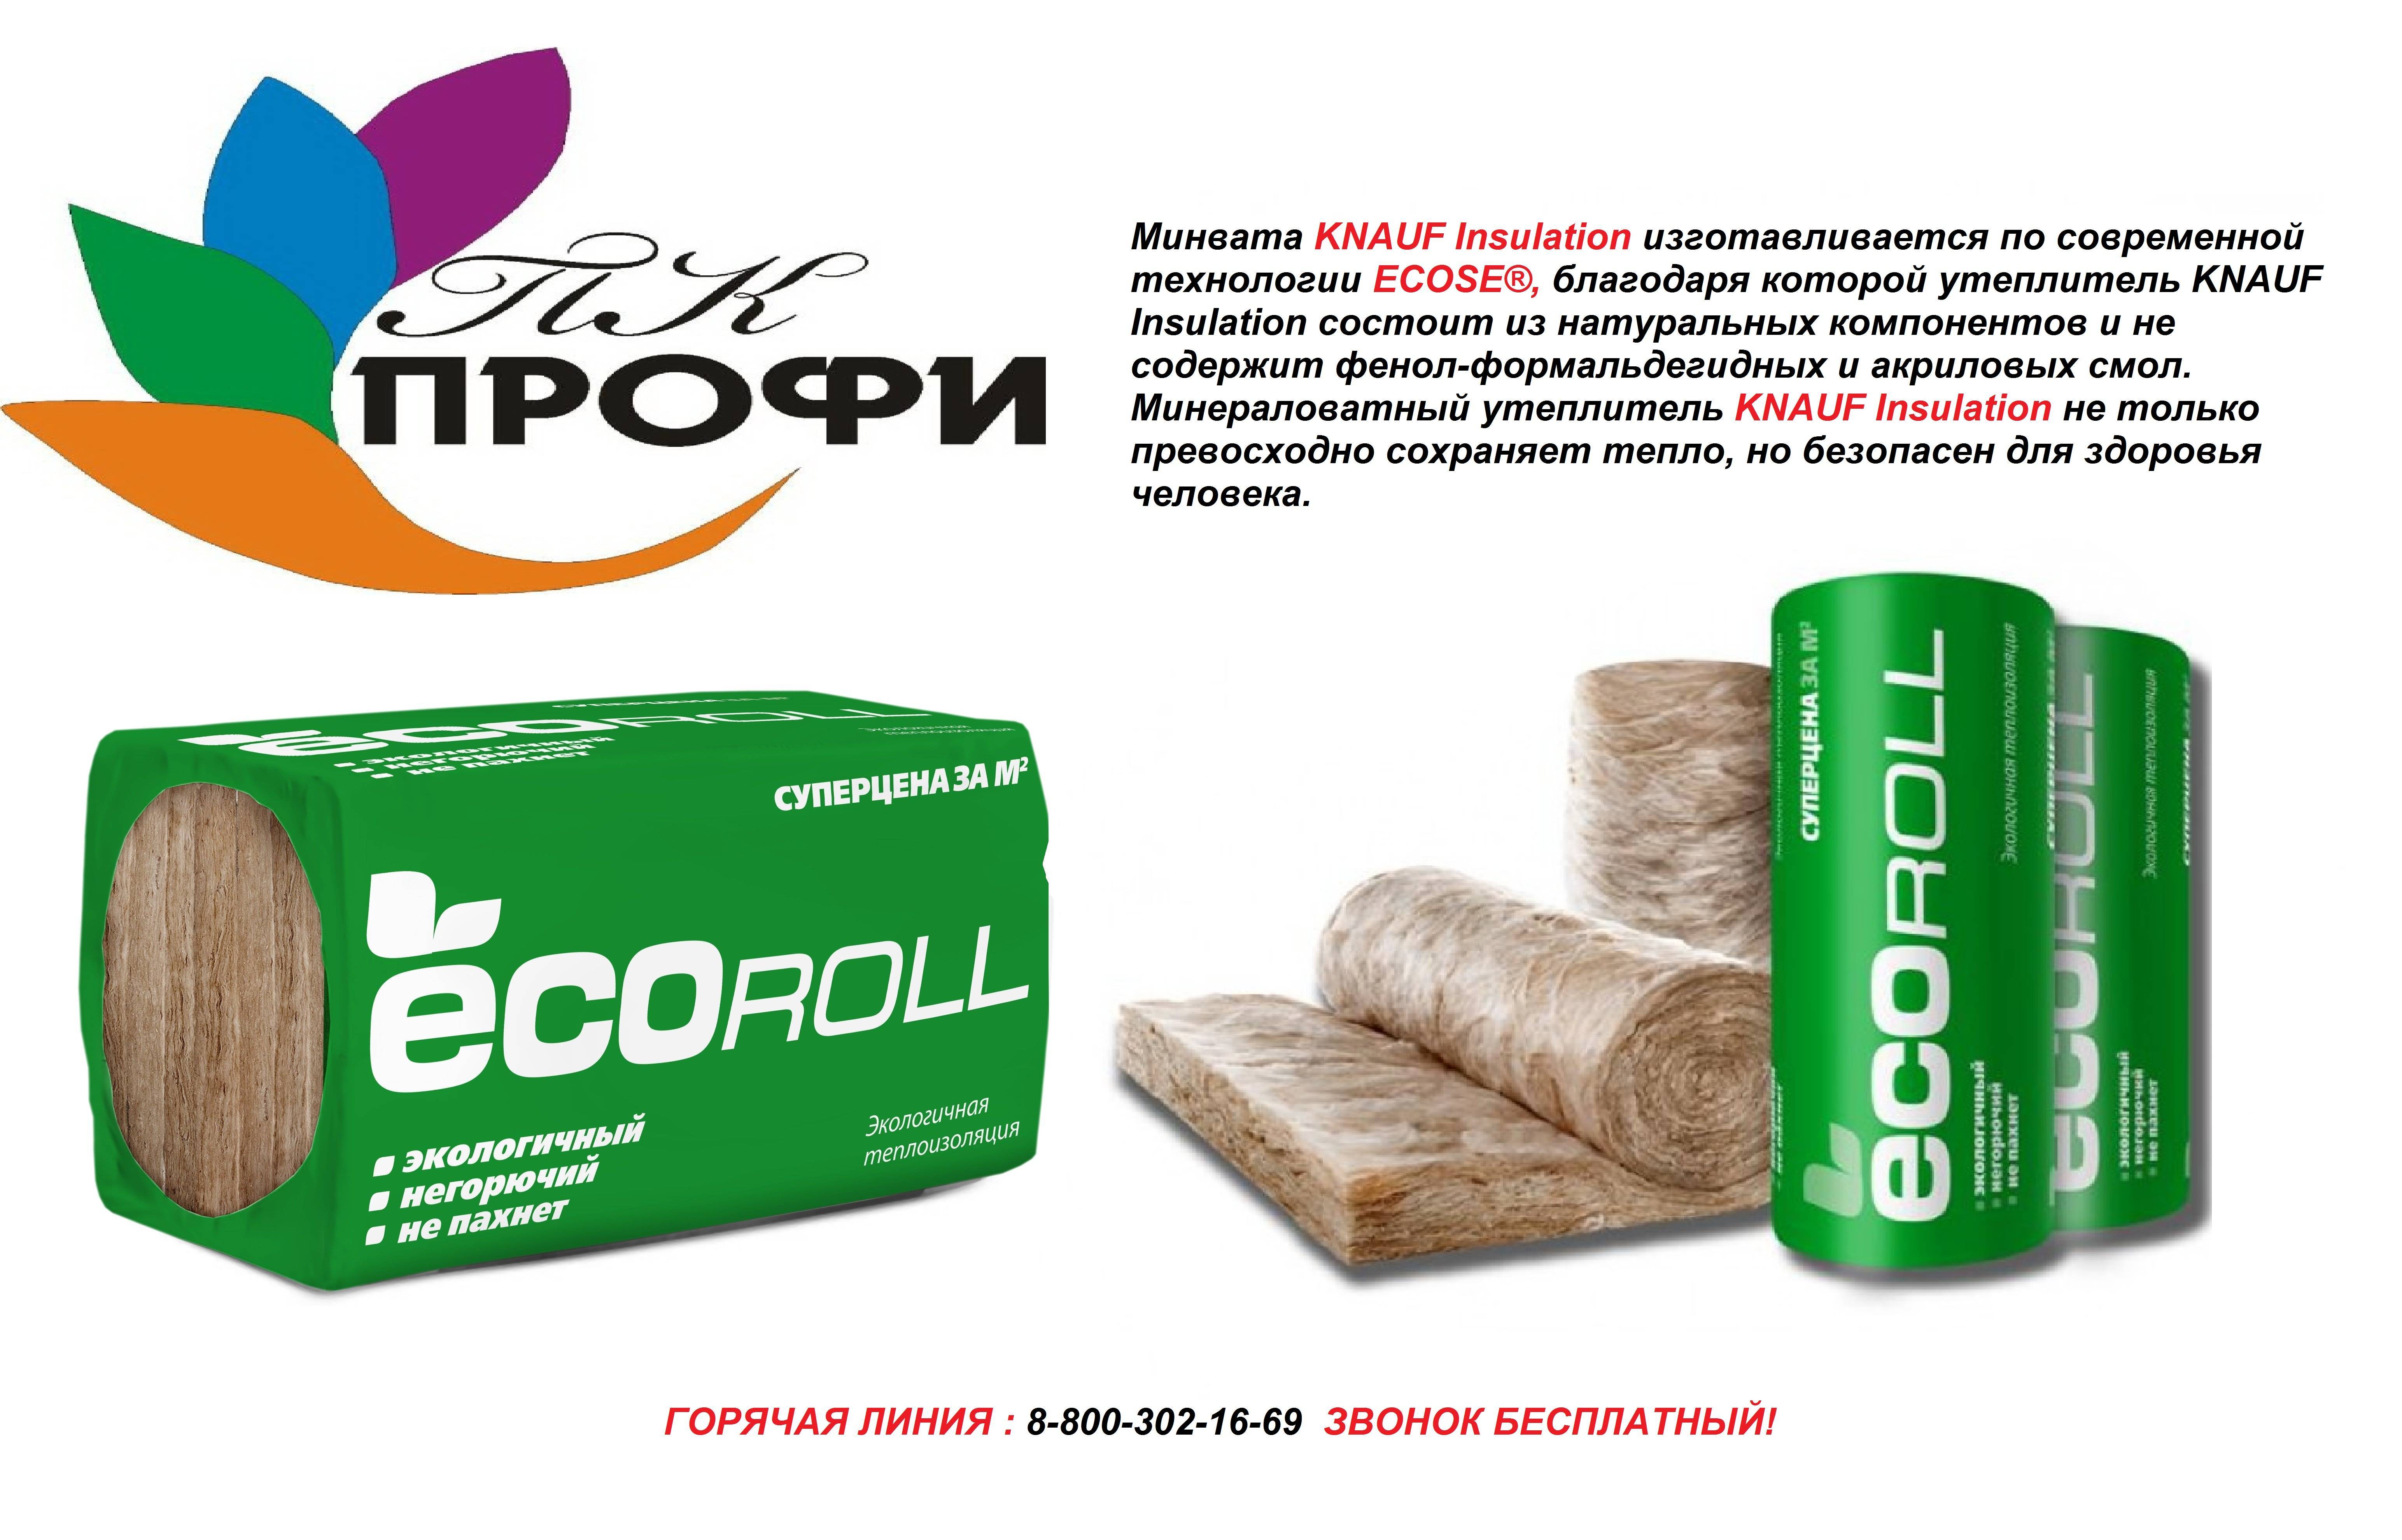 Характеристики и преимущества утеплителя Ecoroll